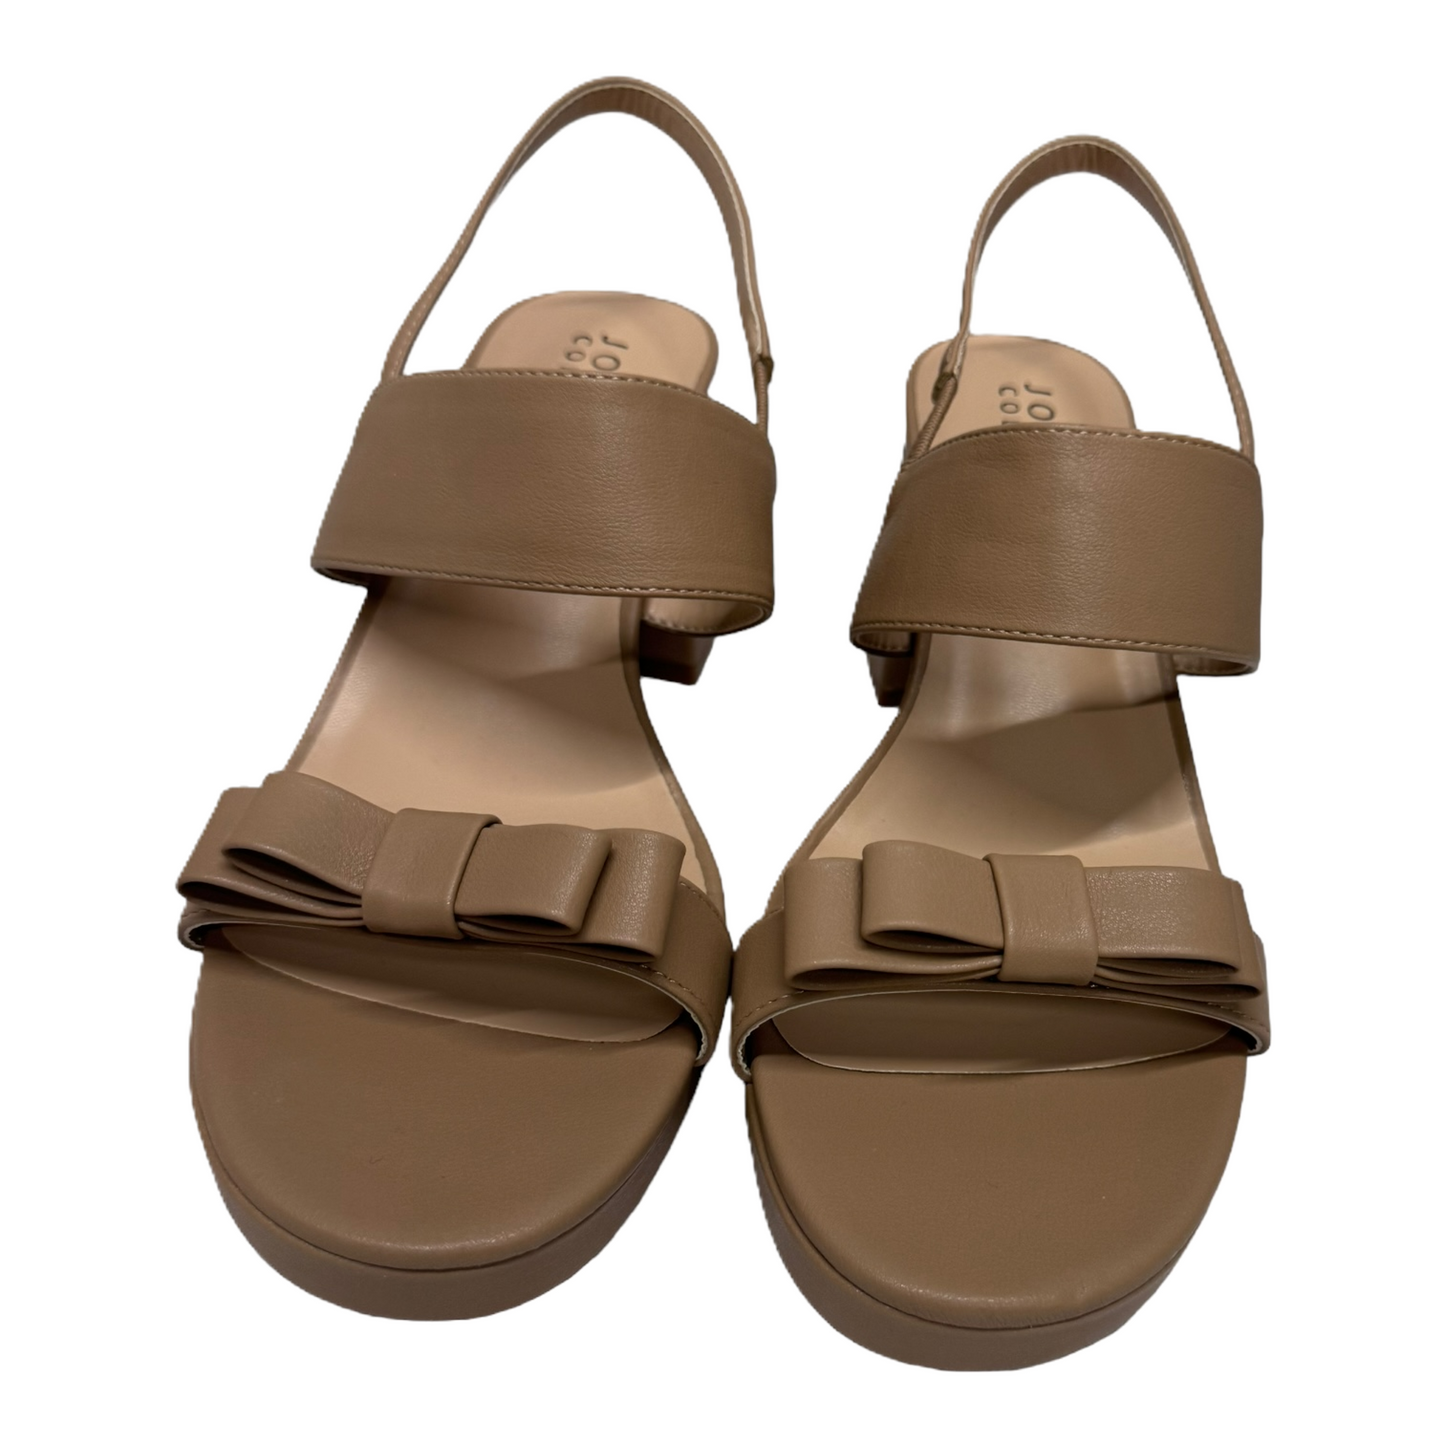 Tan Sandals Heels Block By Journee, Size: 9.5